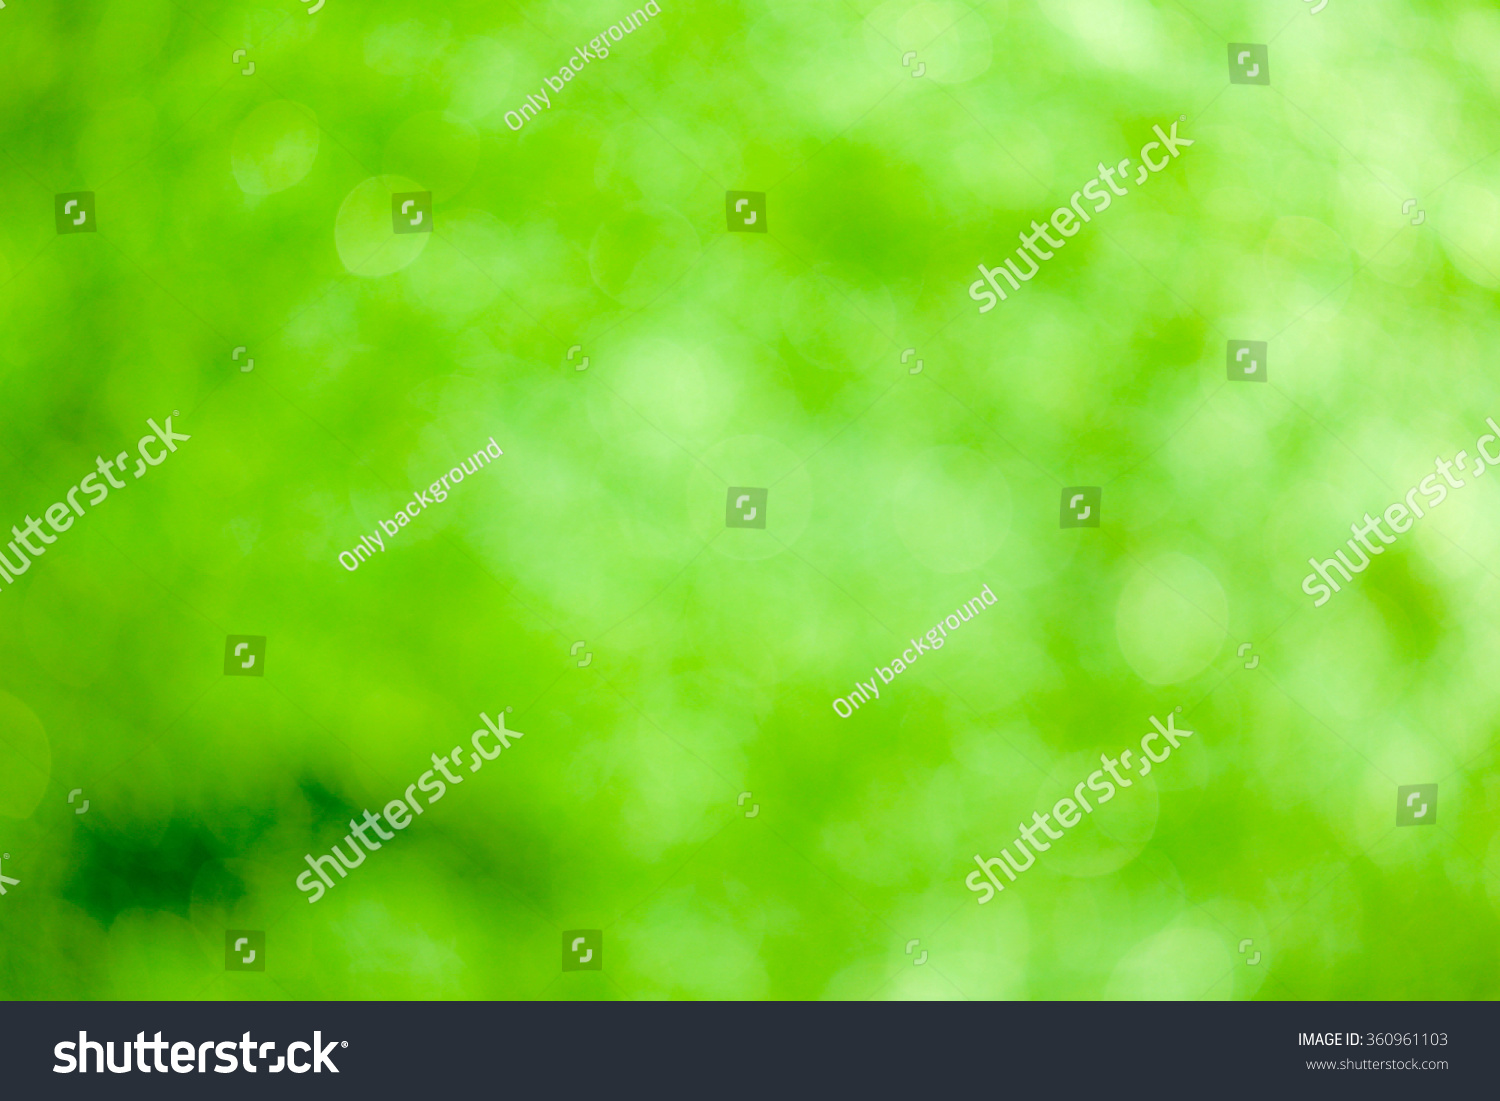 Green bokeh soft background #360961103